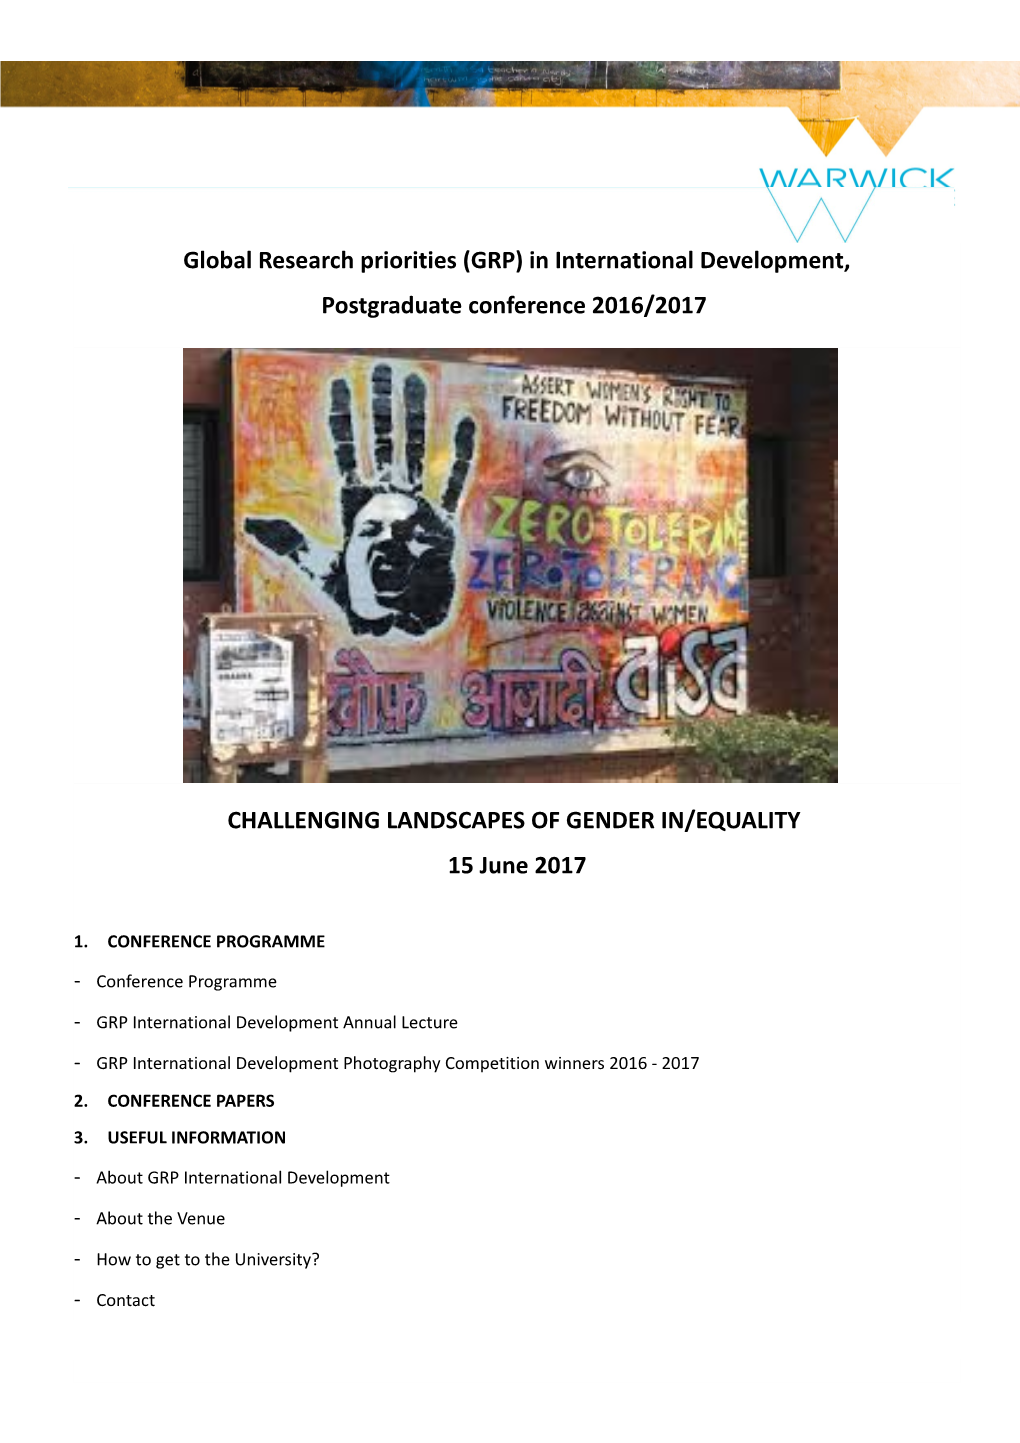 Global Research Priorities (GRP) in International Development